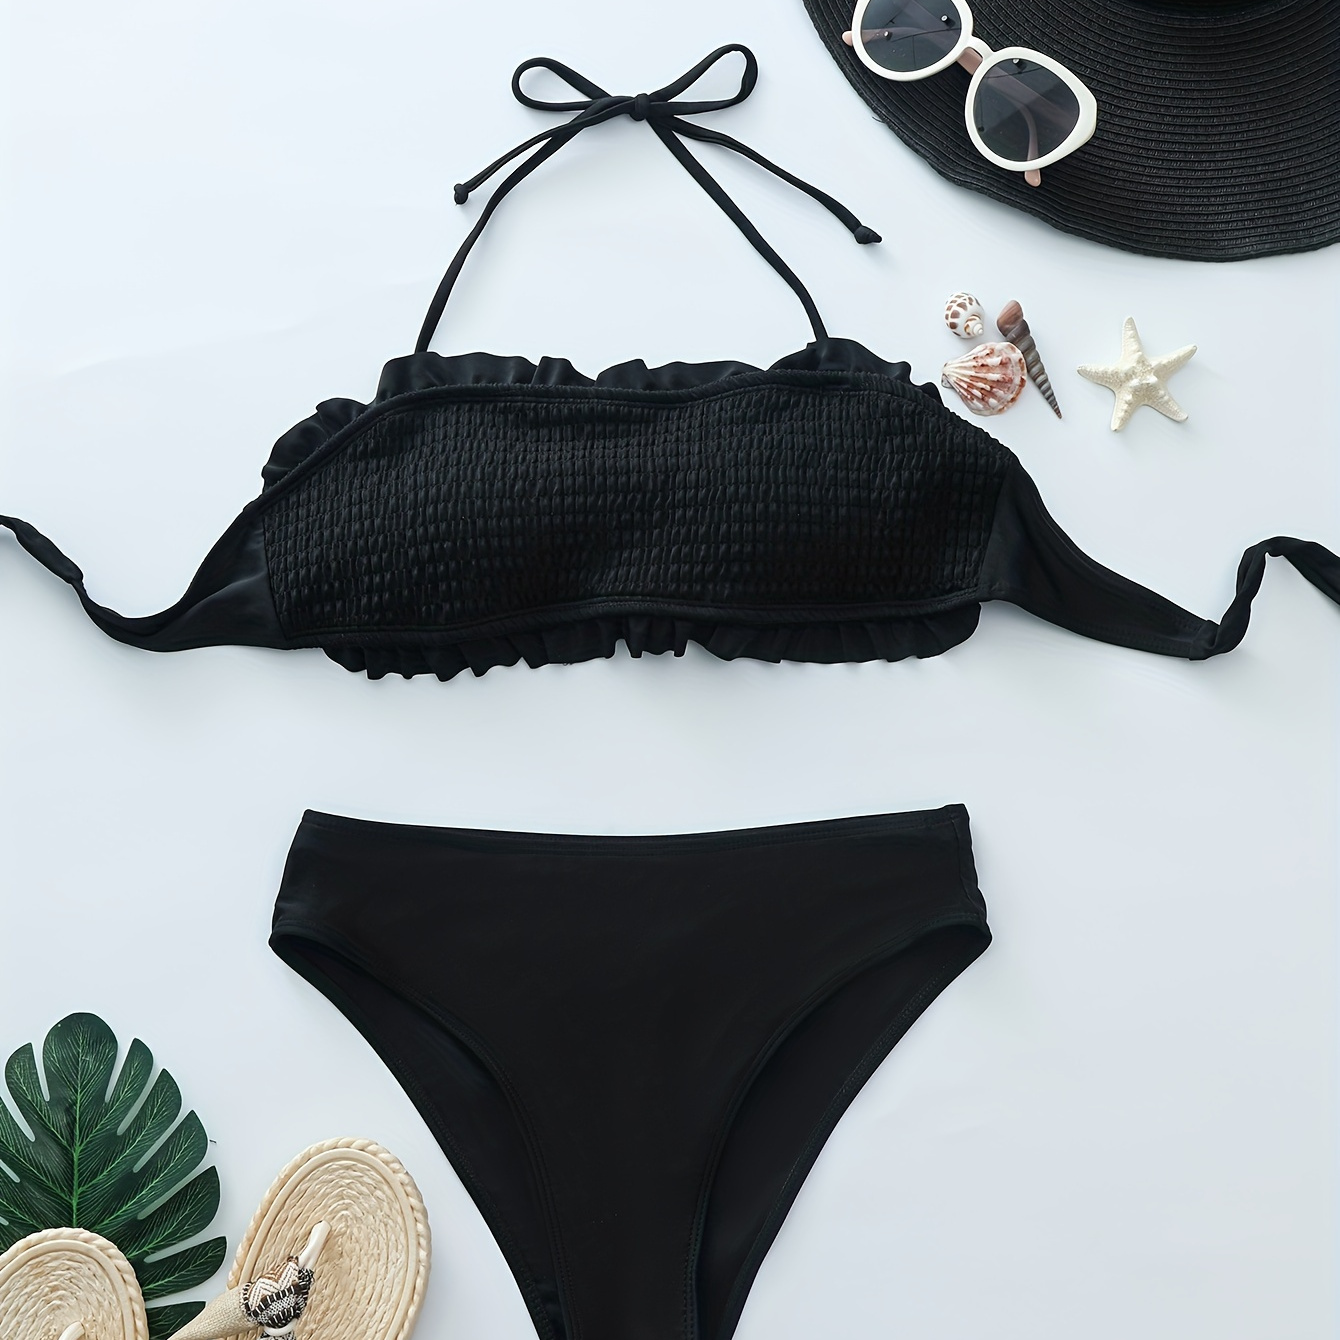 

Plain Black Smoked 2 Piece Set Bikini, Halter Tie Neck High Stretch Swimsuits, Women's Swimwear & Clothing